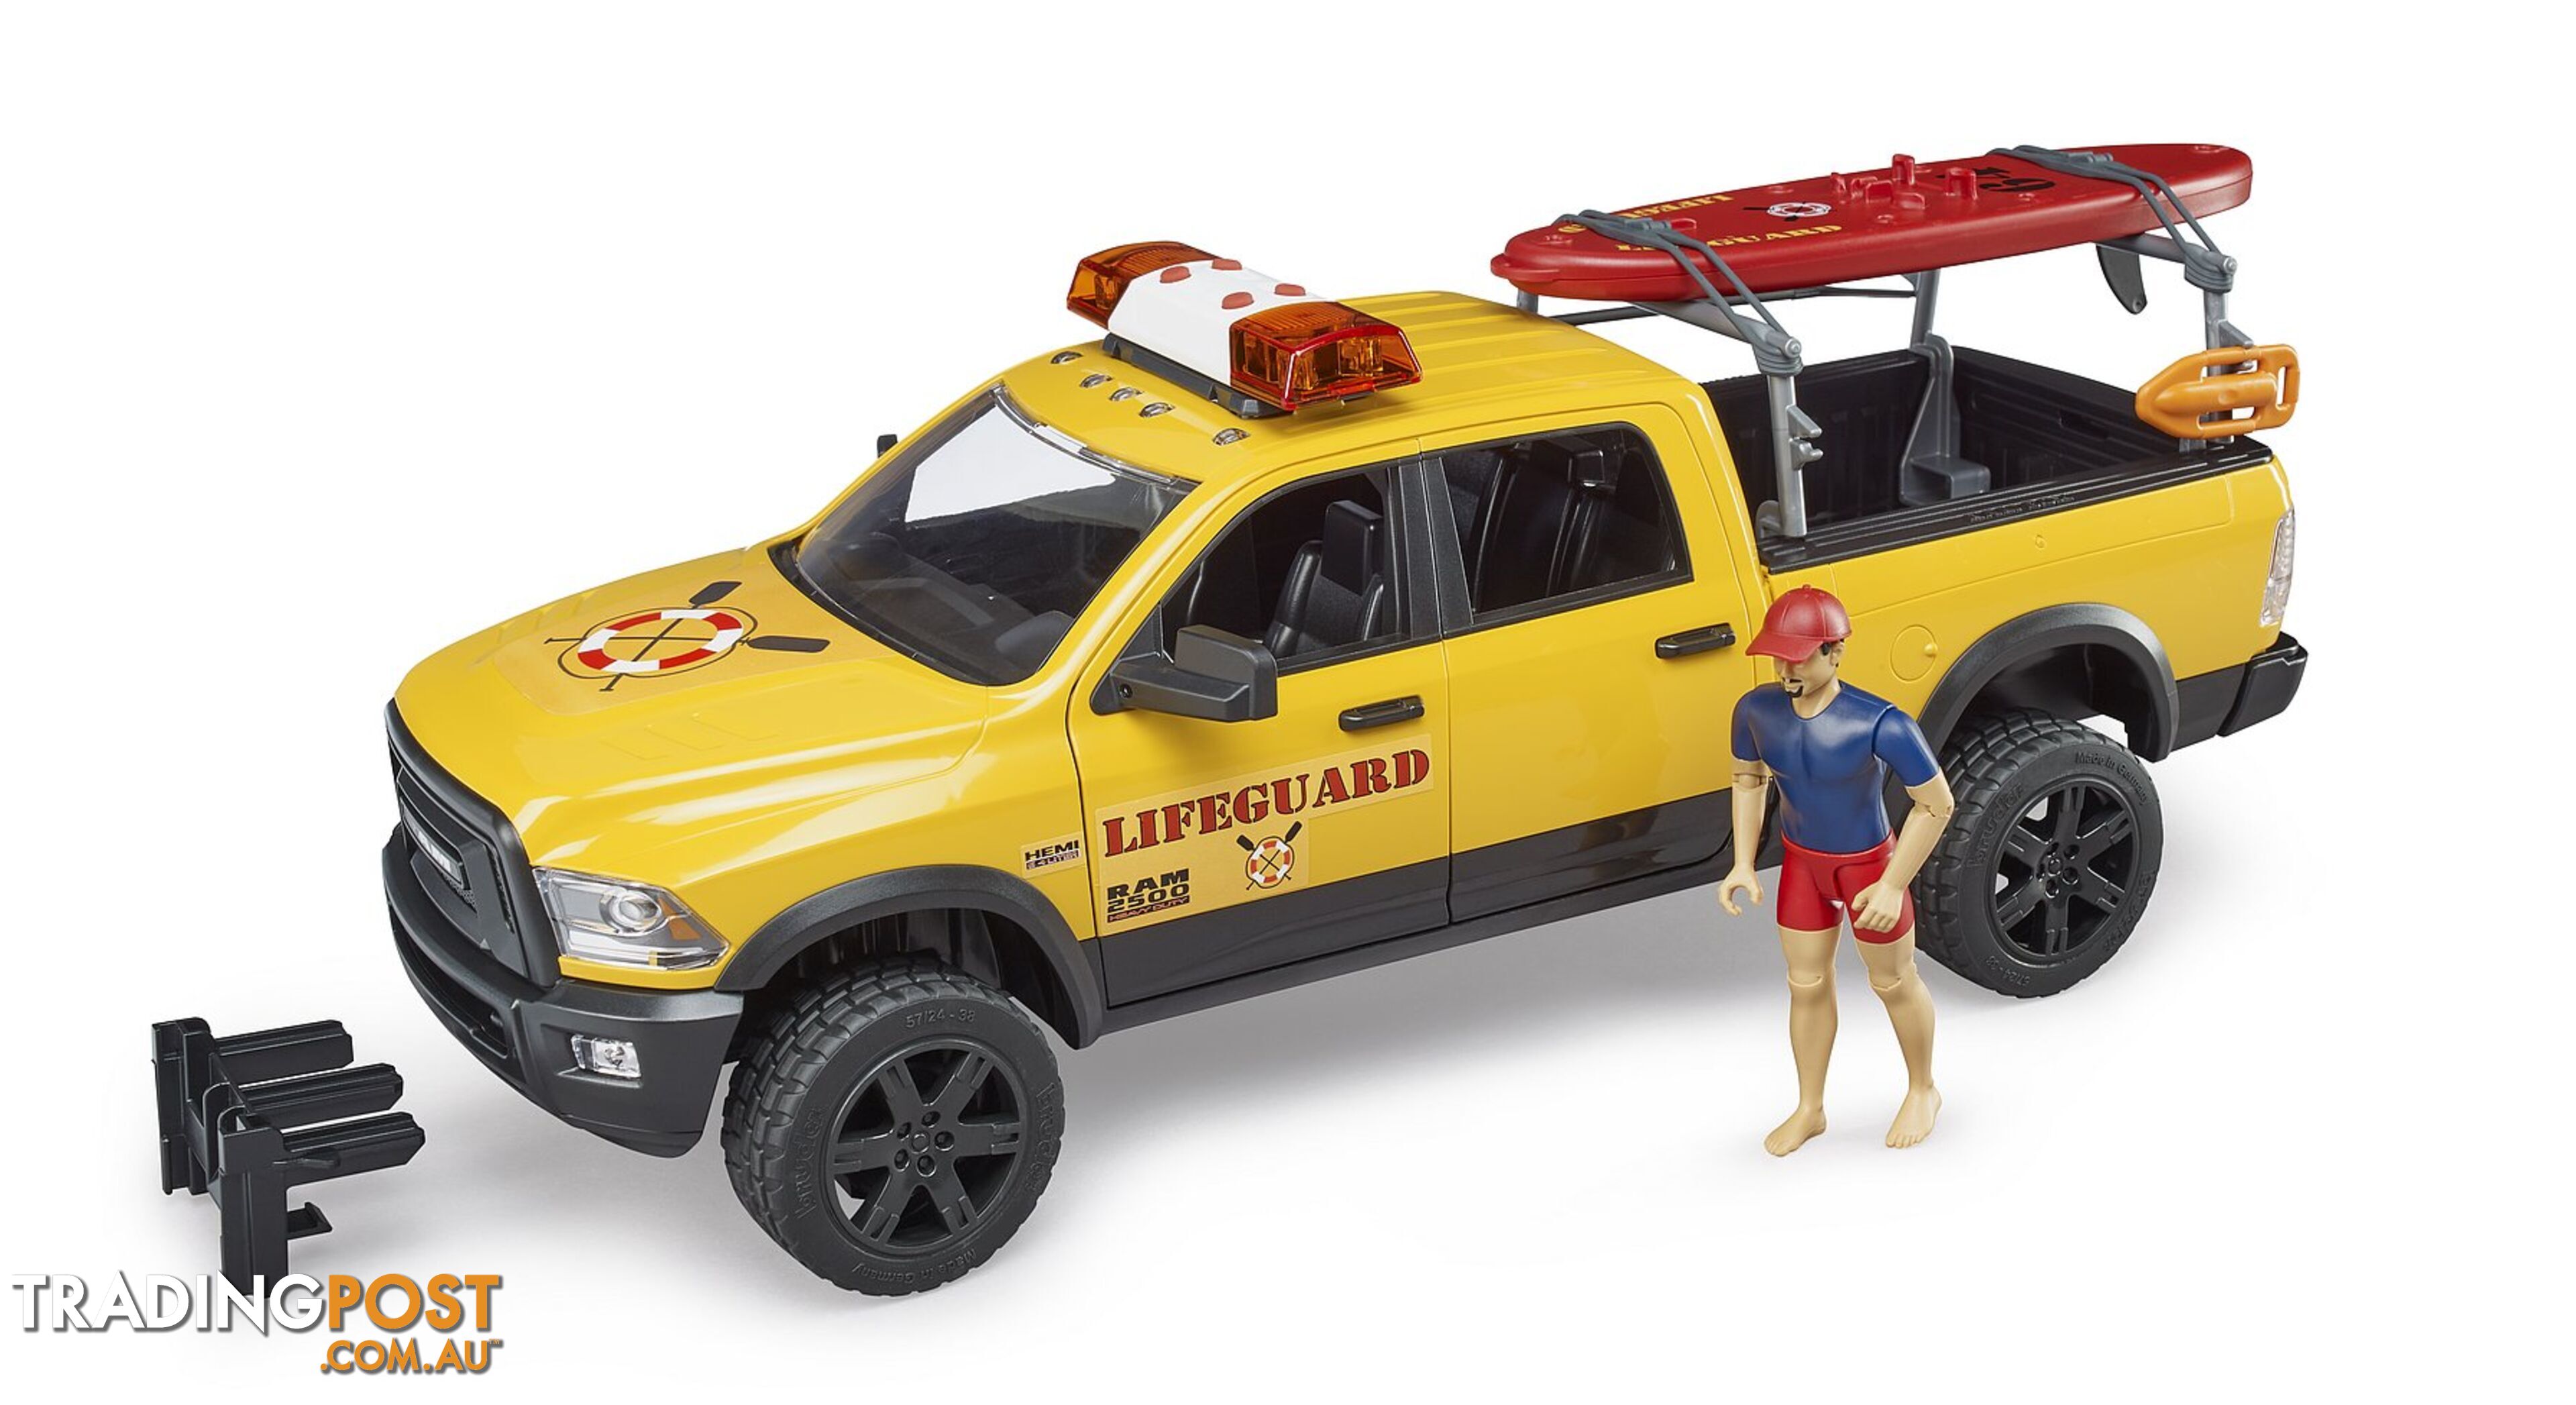 Bruder 1:16 Ram Power Wagon RAM 2500 With Lifeguard Figure Paddle Board - Zi24002506 - 4001702025069